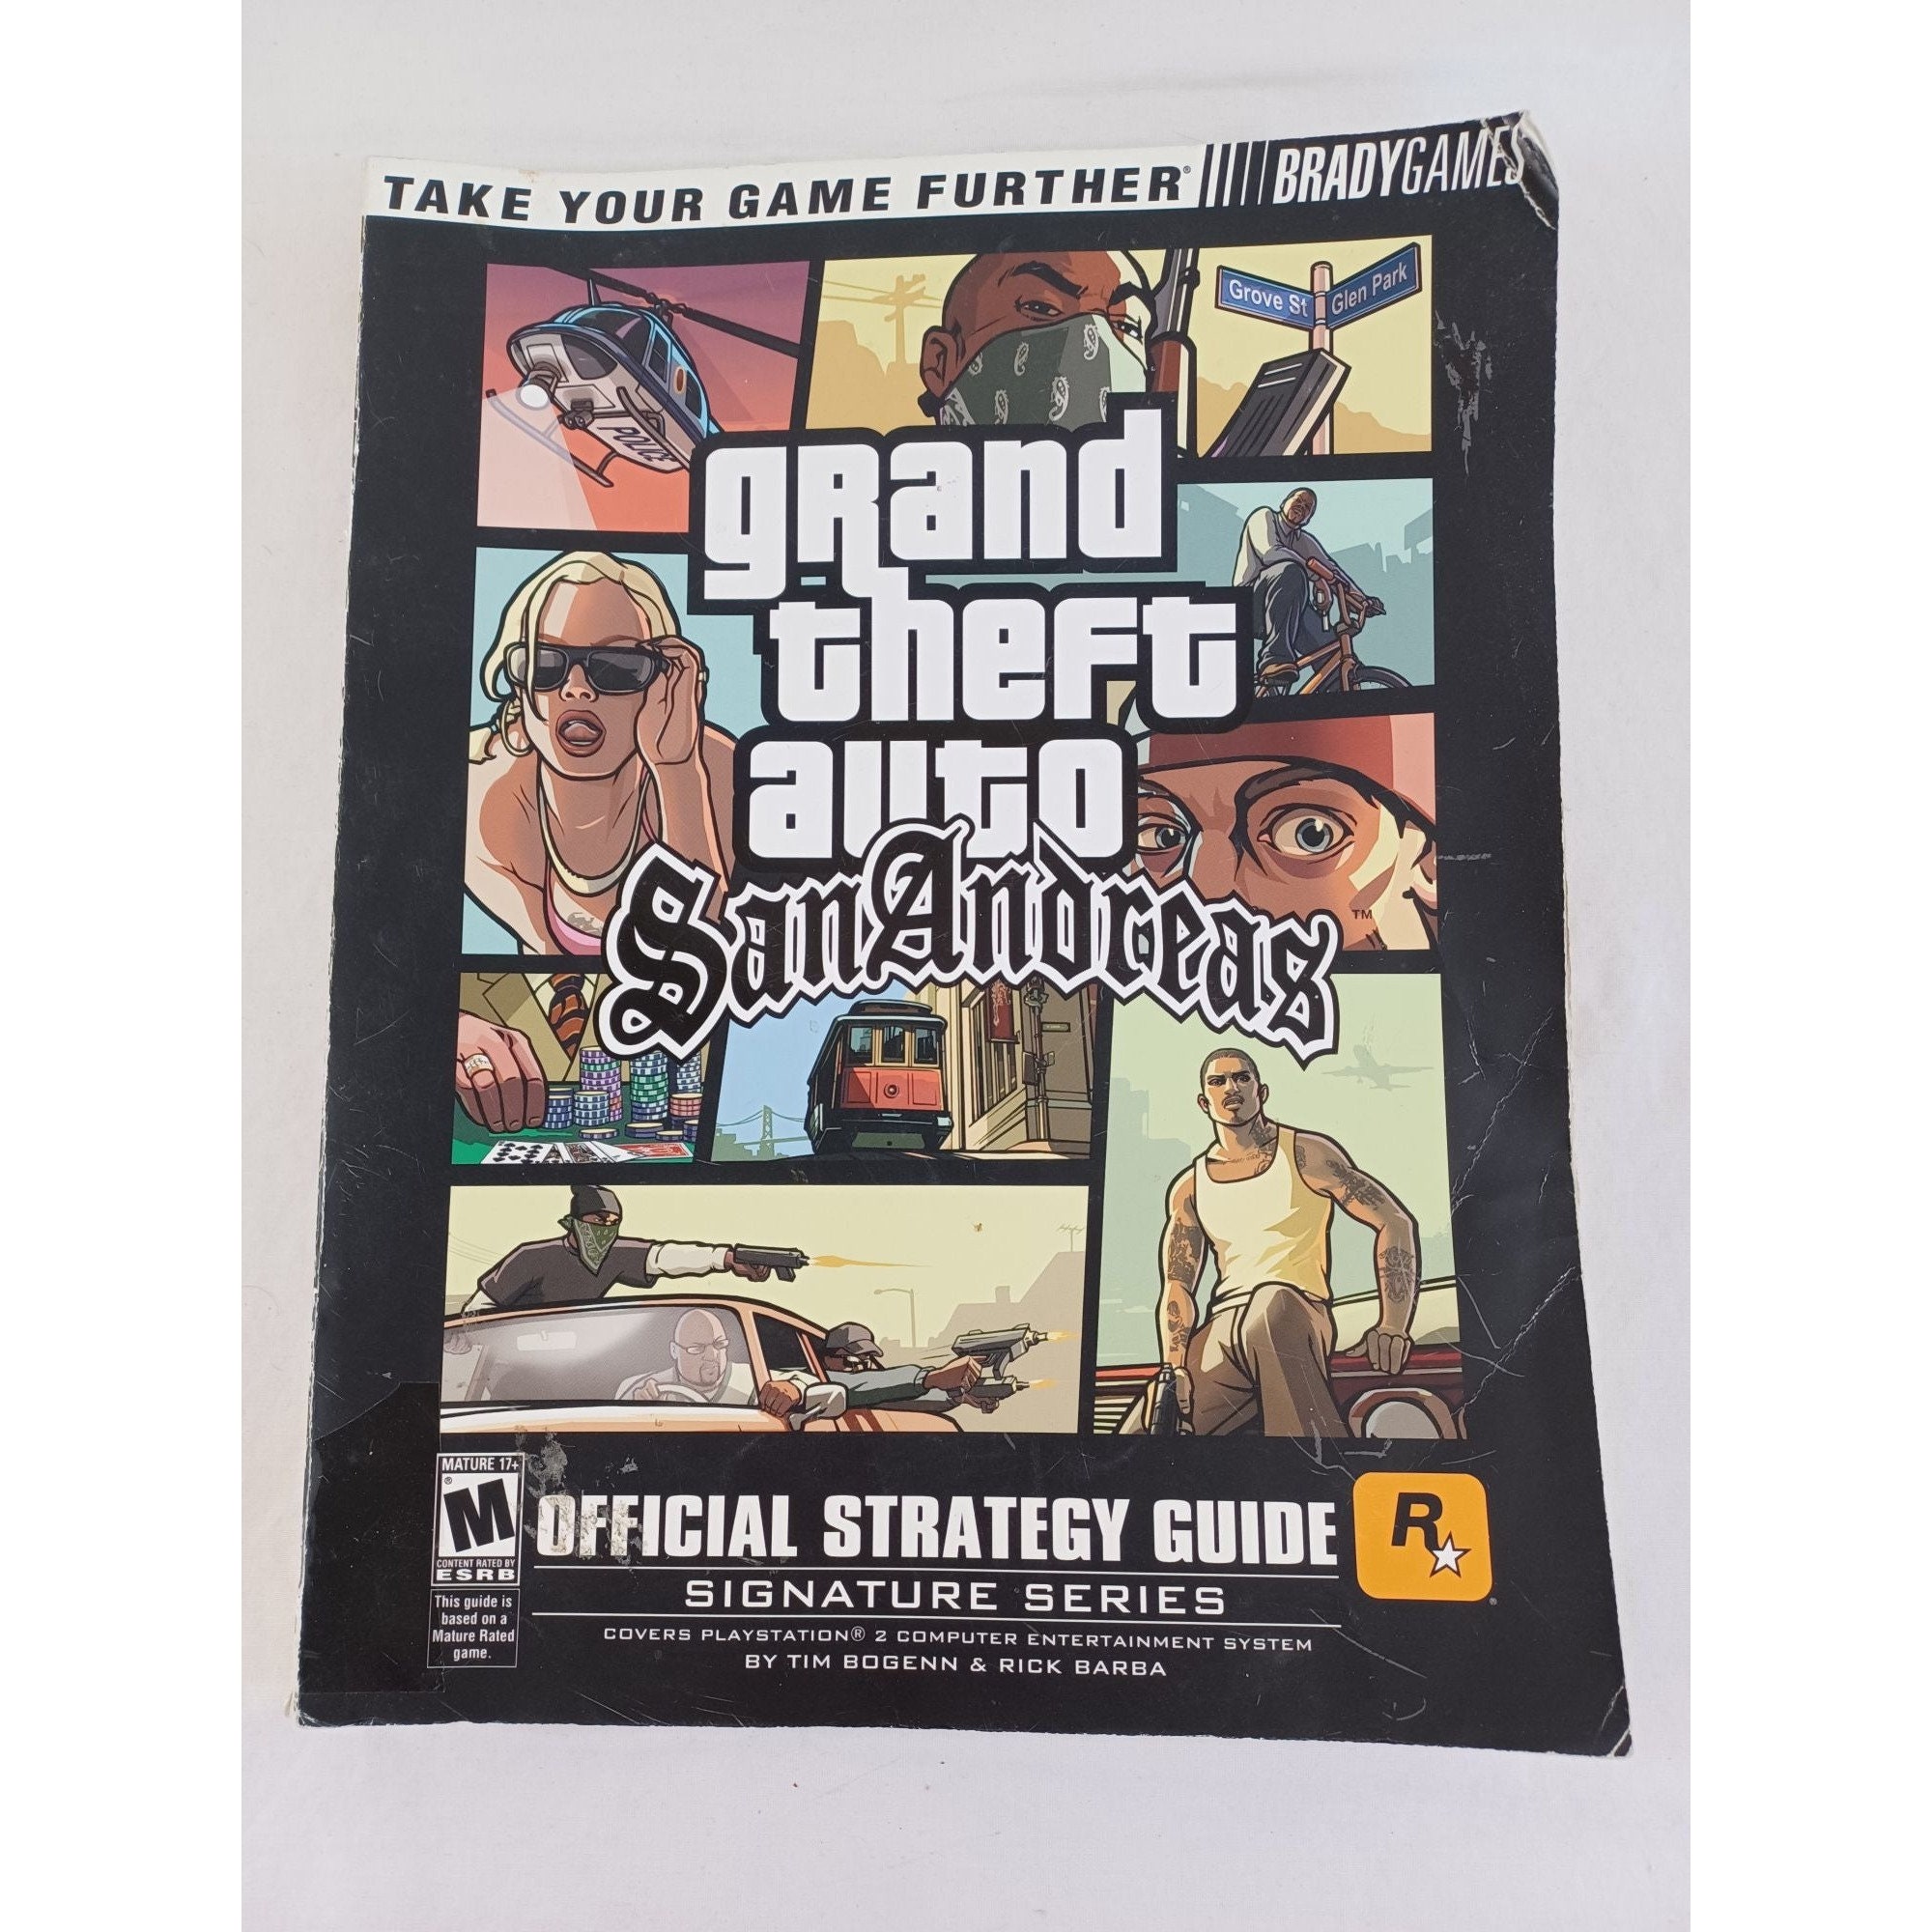 Grand Theft Auto San Andreas PlayStation 2 PS2 w/ Manual & Map Free Shipping